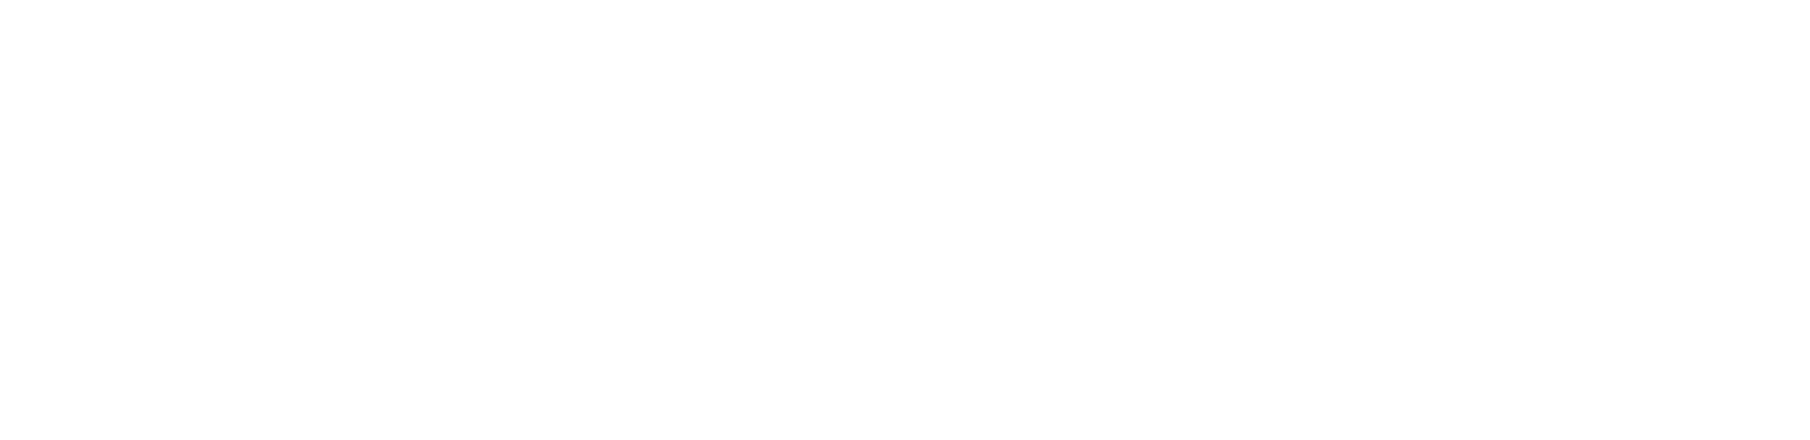 My-muse logo